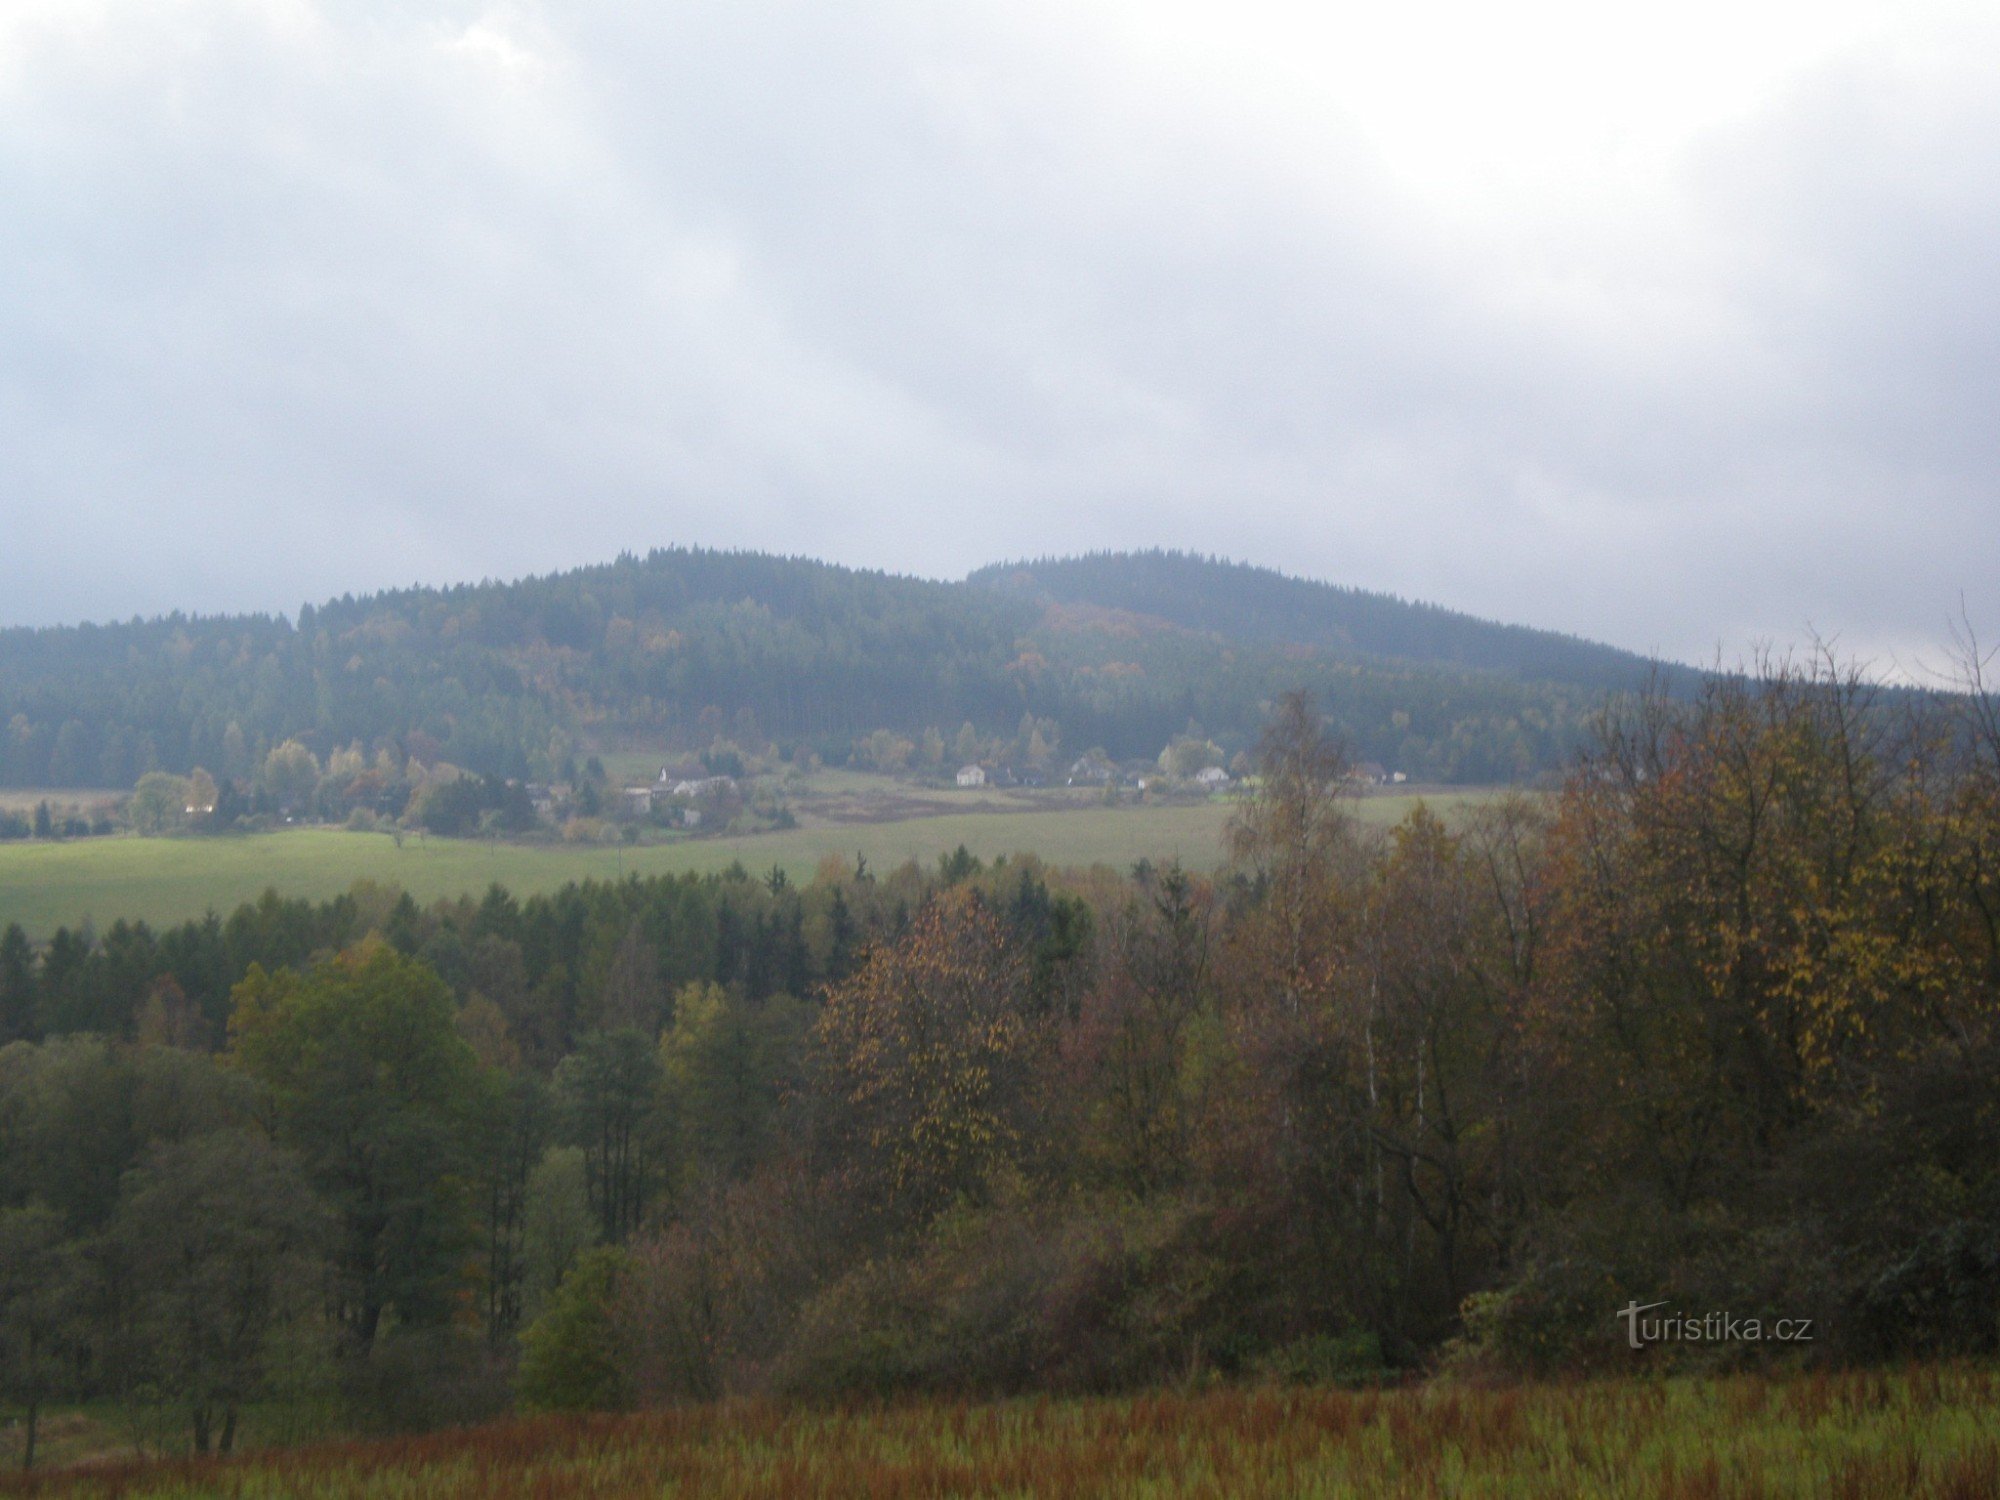 Malá Třemošná (701 m) și Třemošná (779 m) din nord